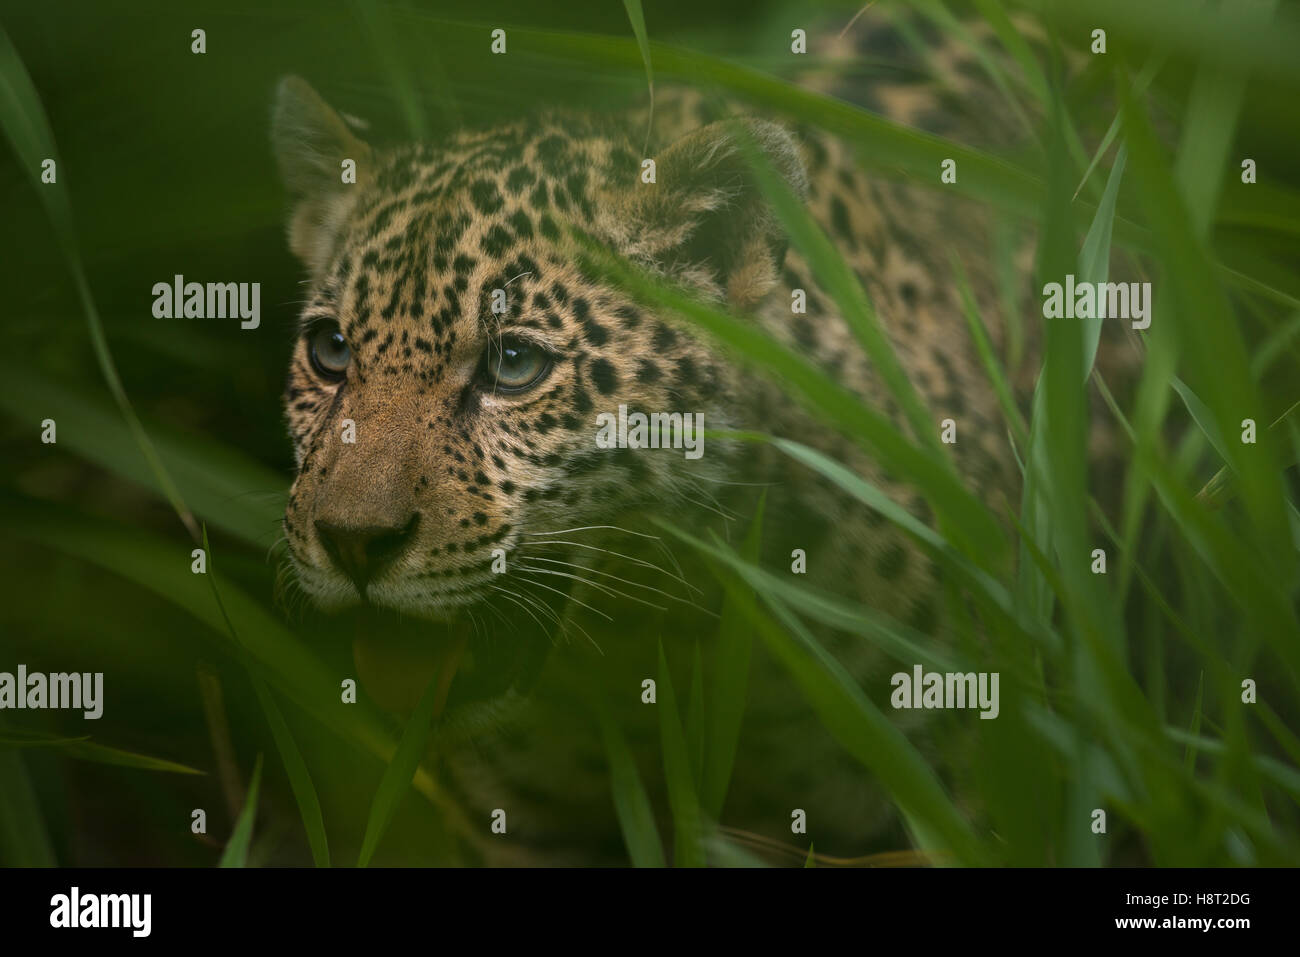 A jaguar cub looks through the vegetation Stock Photo